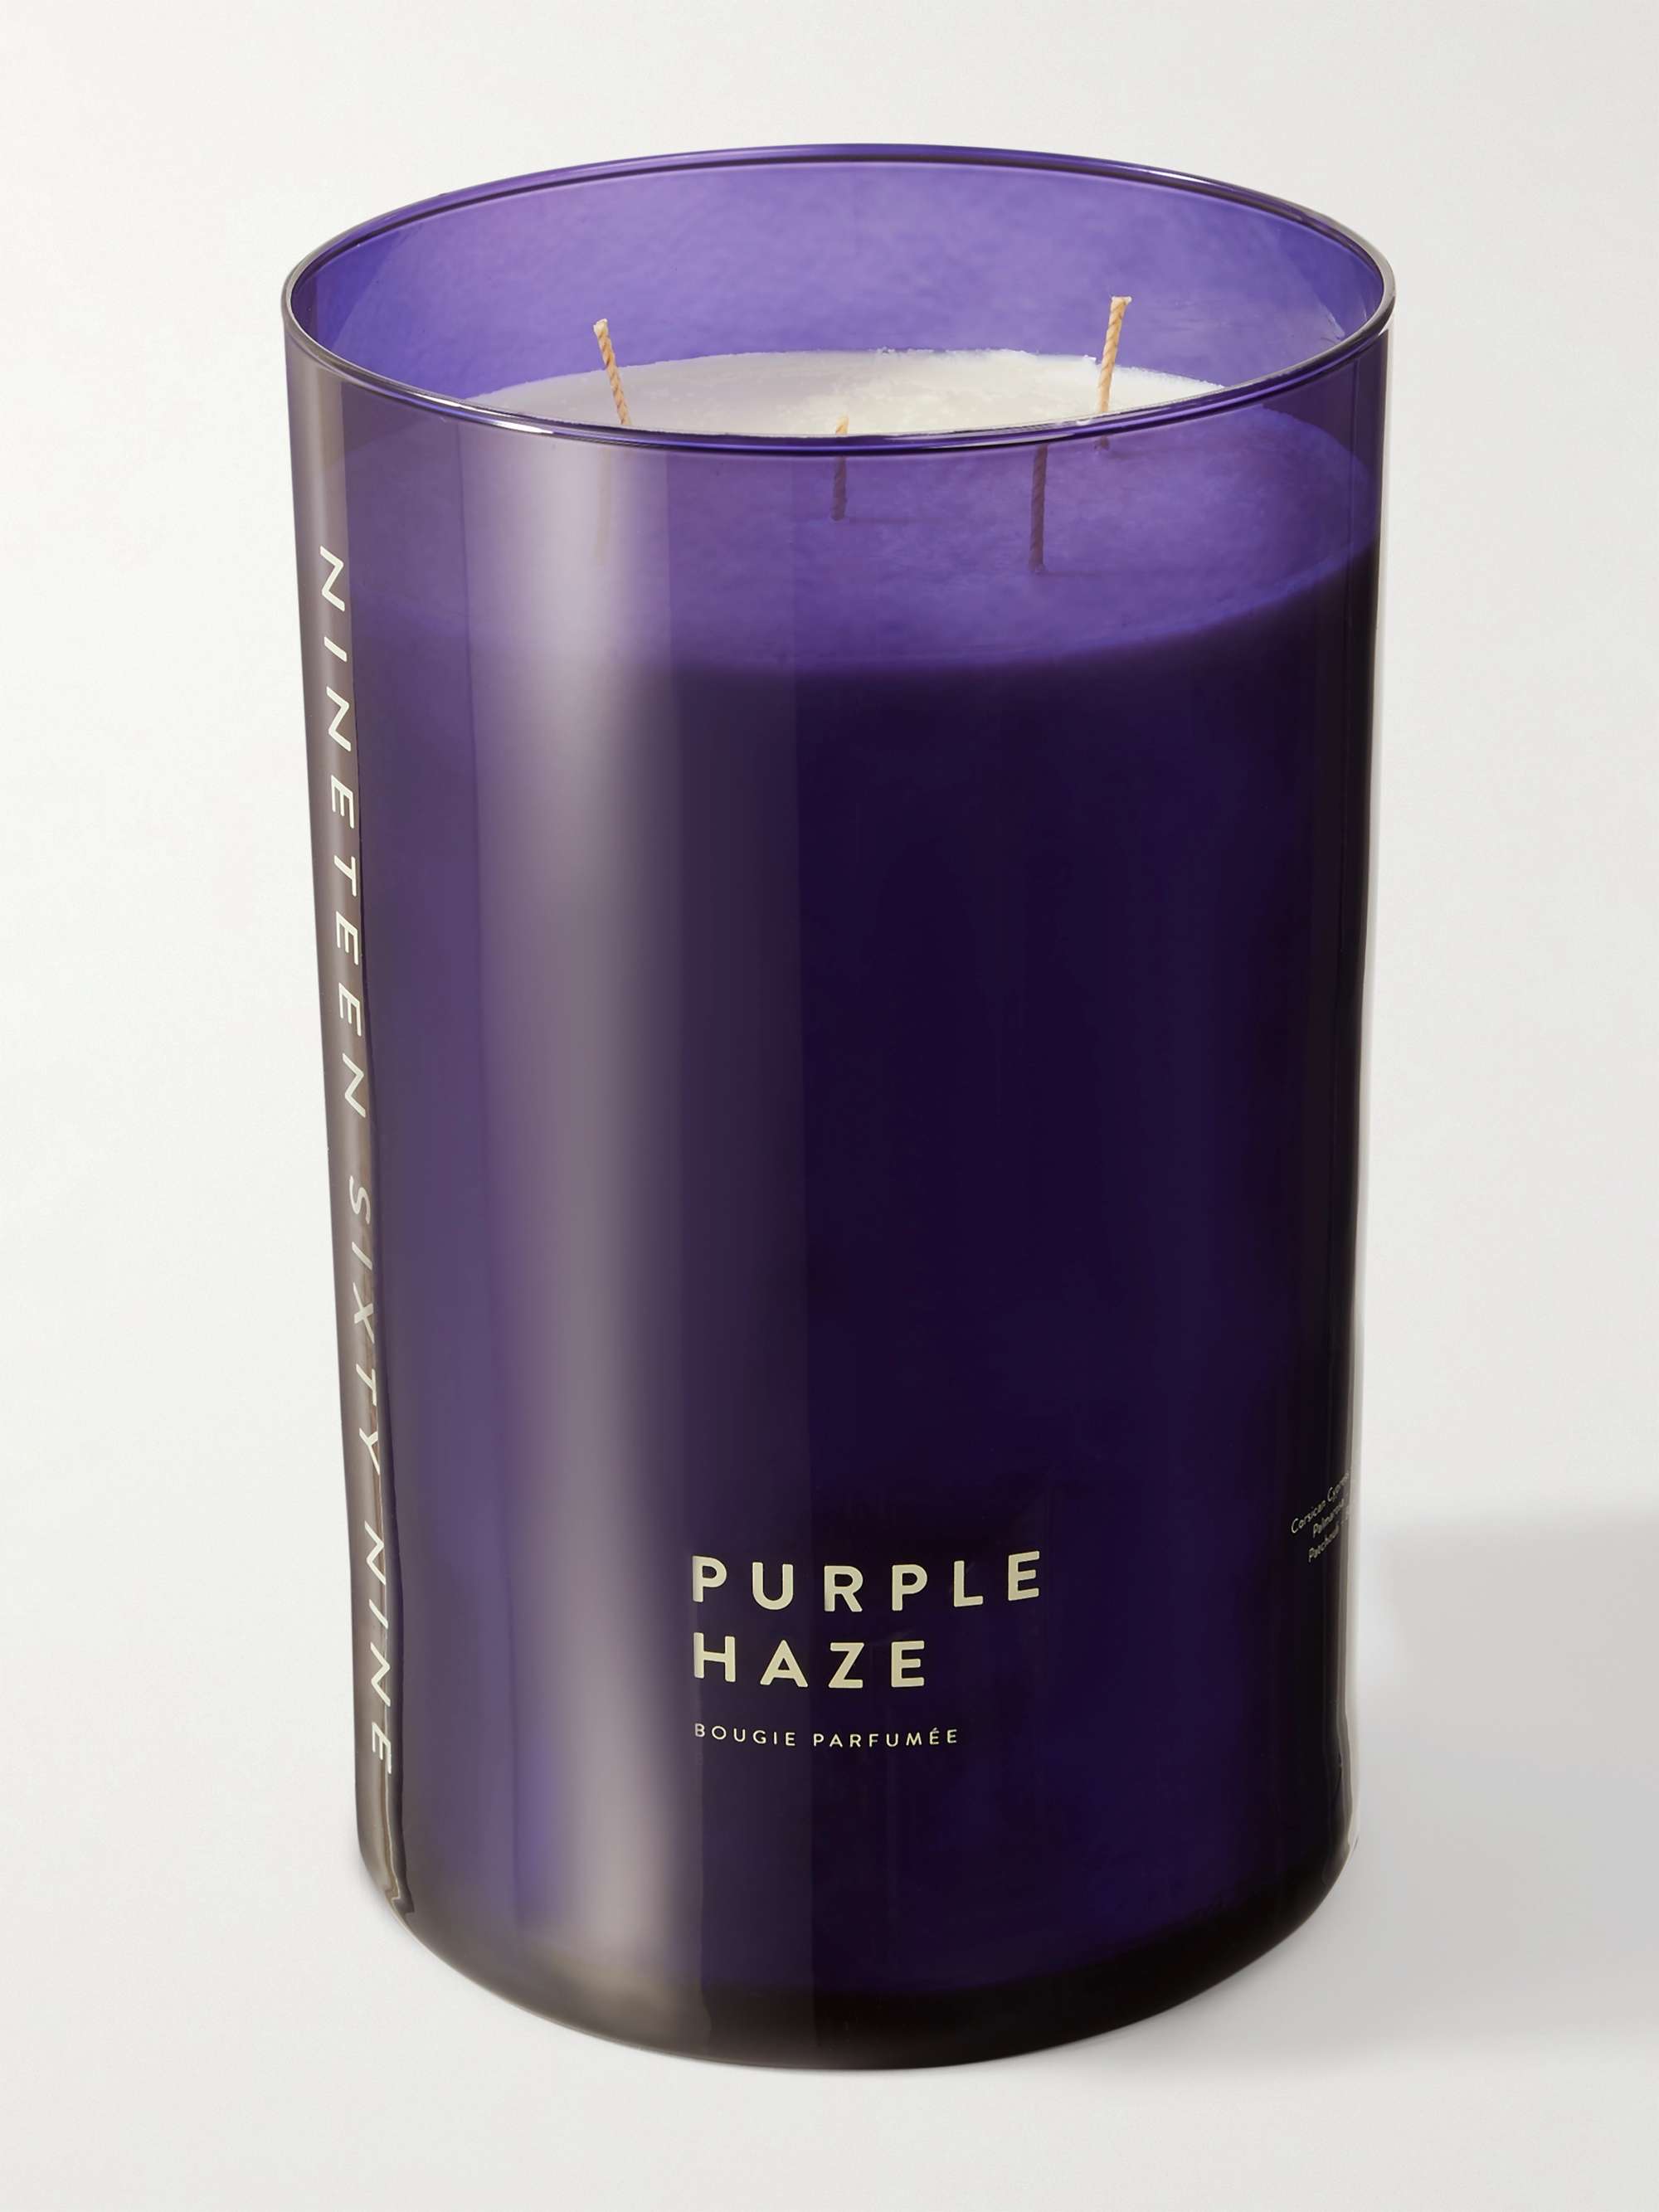 19-69 Purple Haze Scented Candle, 5300g | MR PORTER